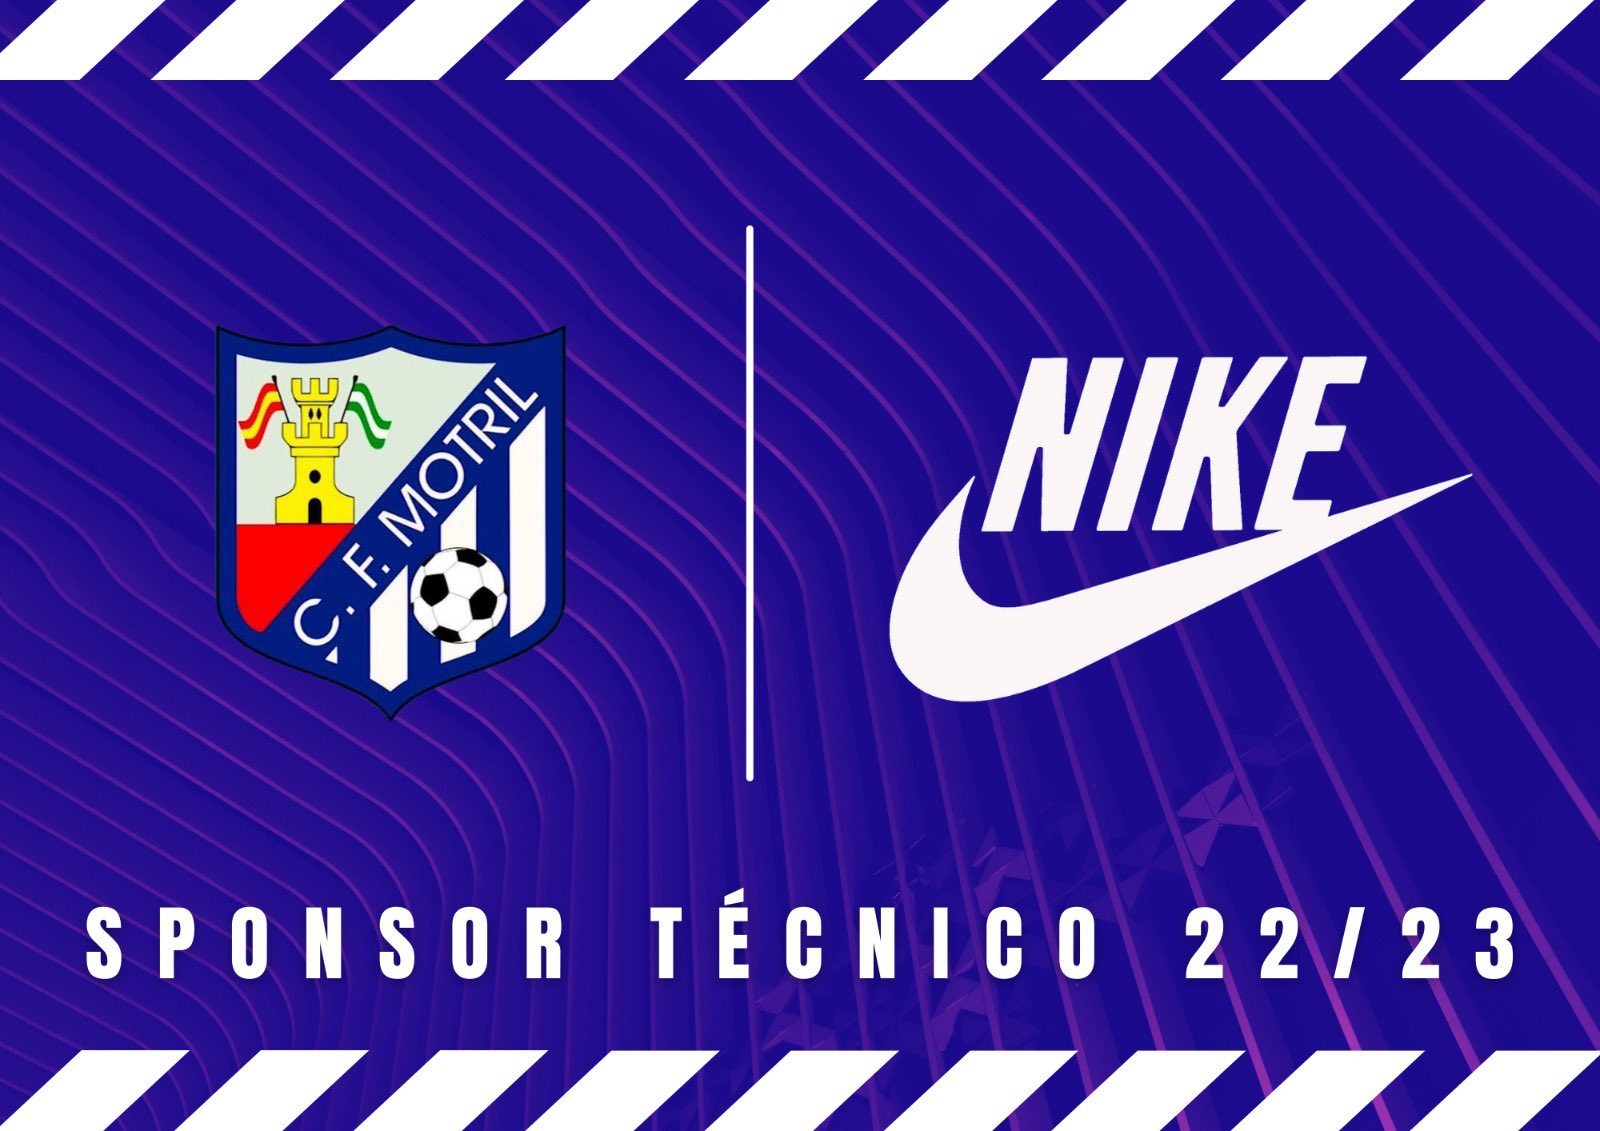 C.F. MOTRIL on Twitter: "Nike seguirá siendo nuestro sponsor para la temporada 22/23. #cfmotril #nike #sponsor #soccer https://t.co/2fZpIMmAY0" Twitter